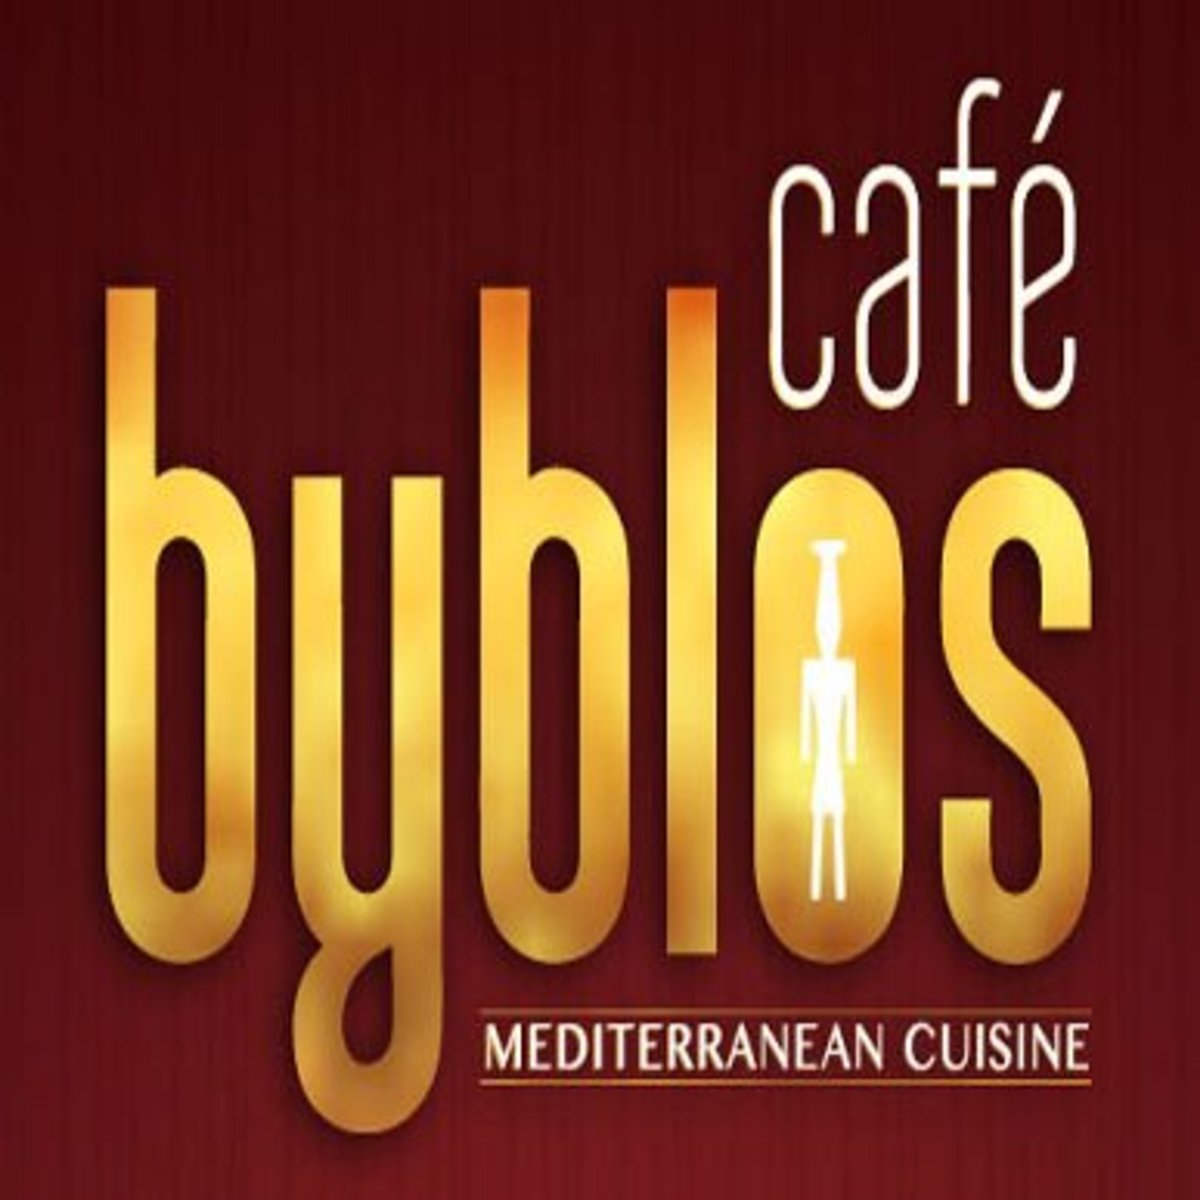 Best Middle Eastern Restaurant